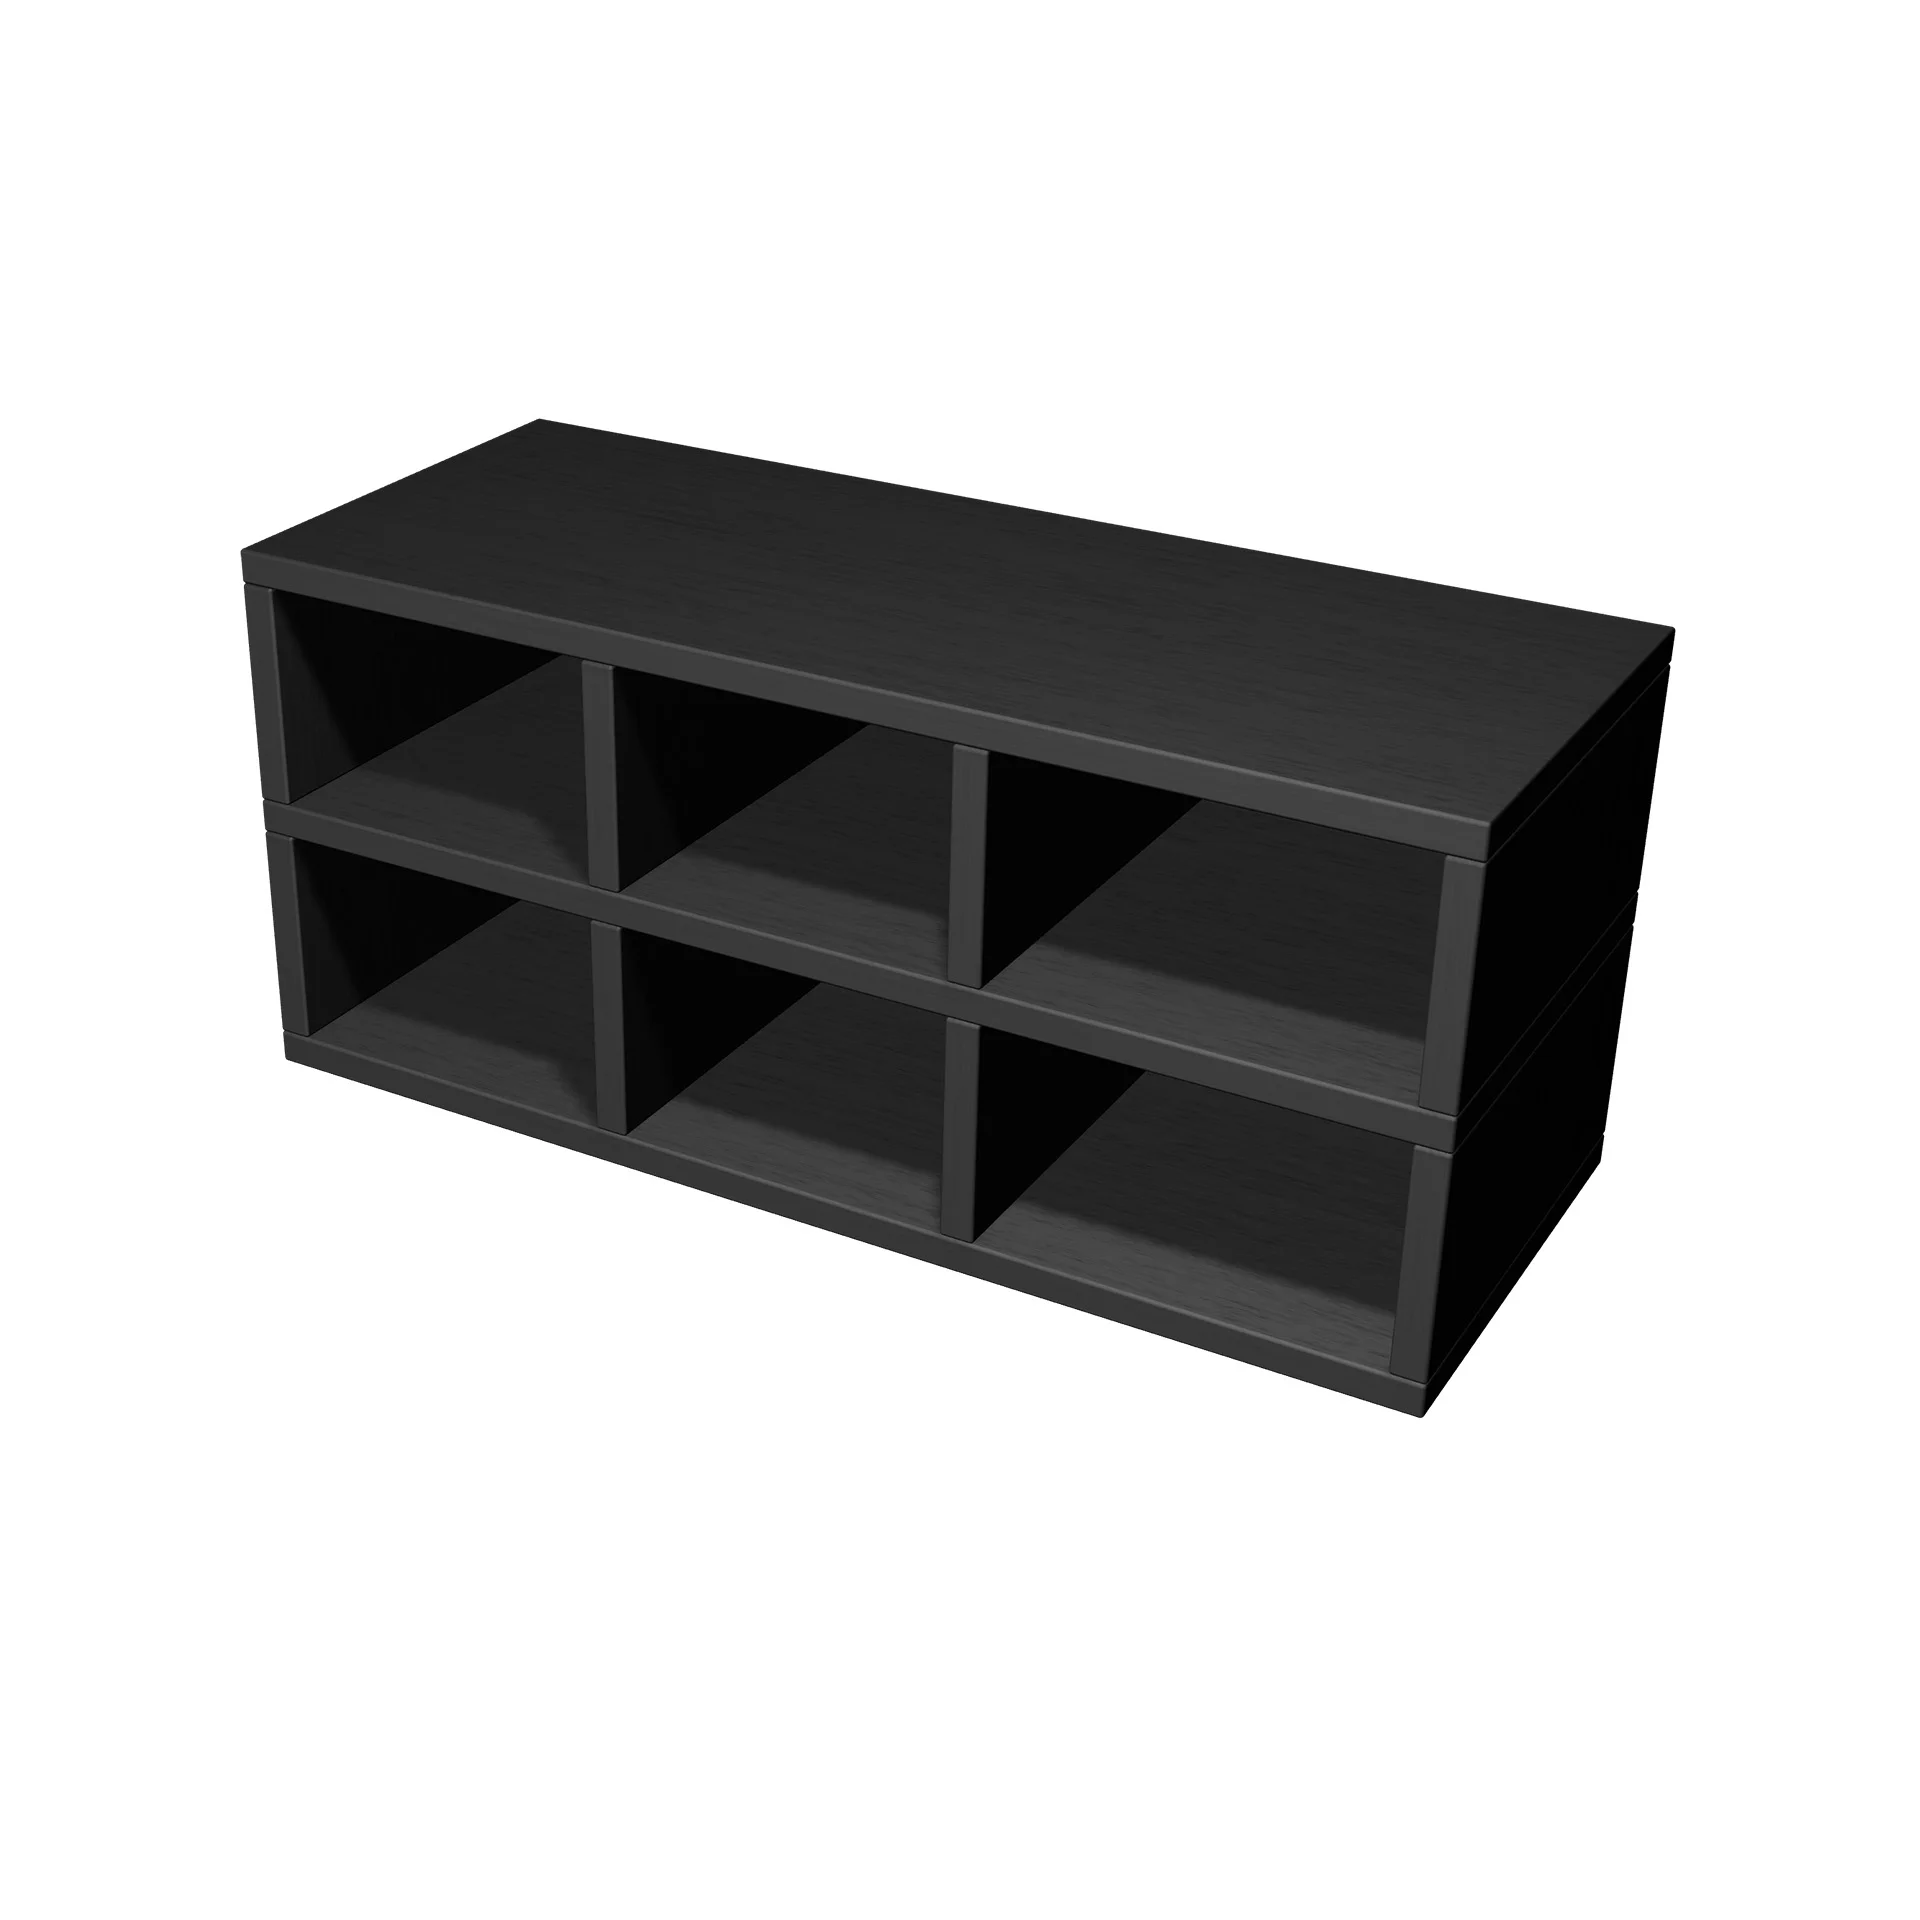 TSFC034 en panel mueble roble negro